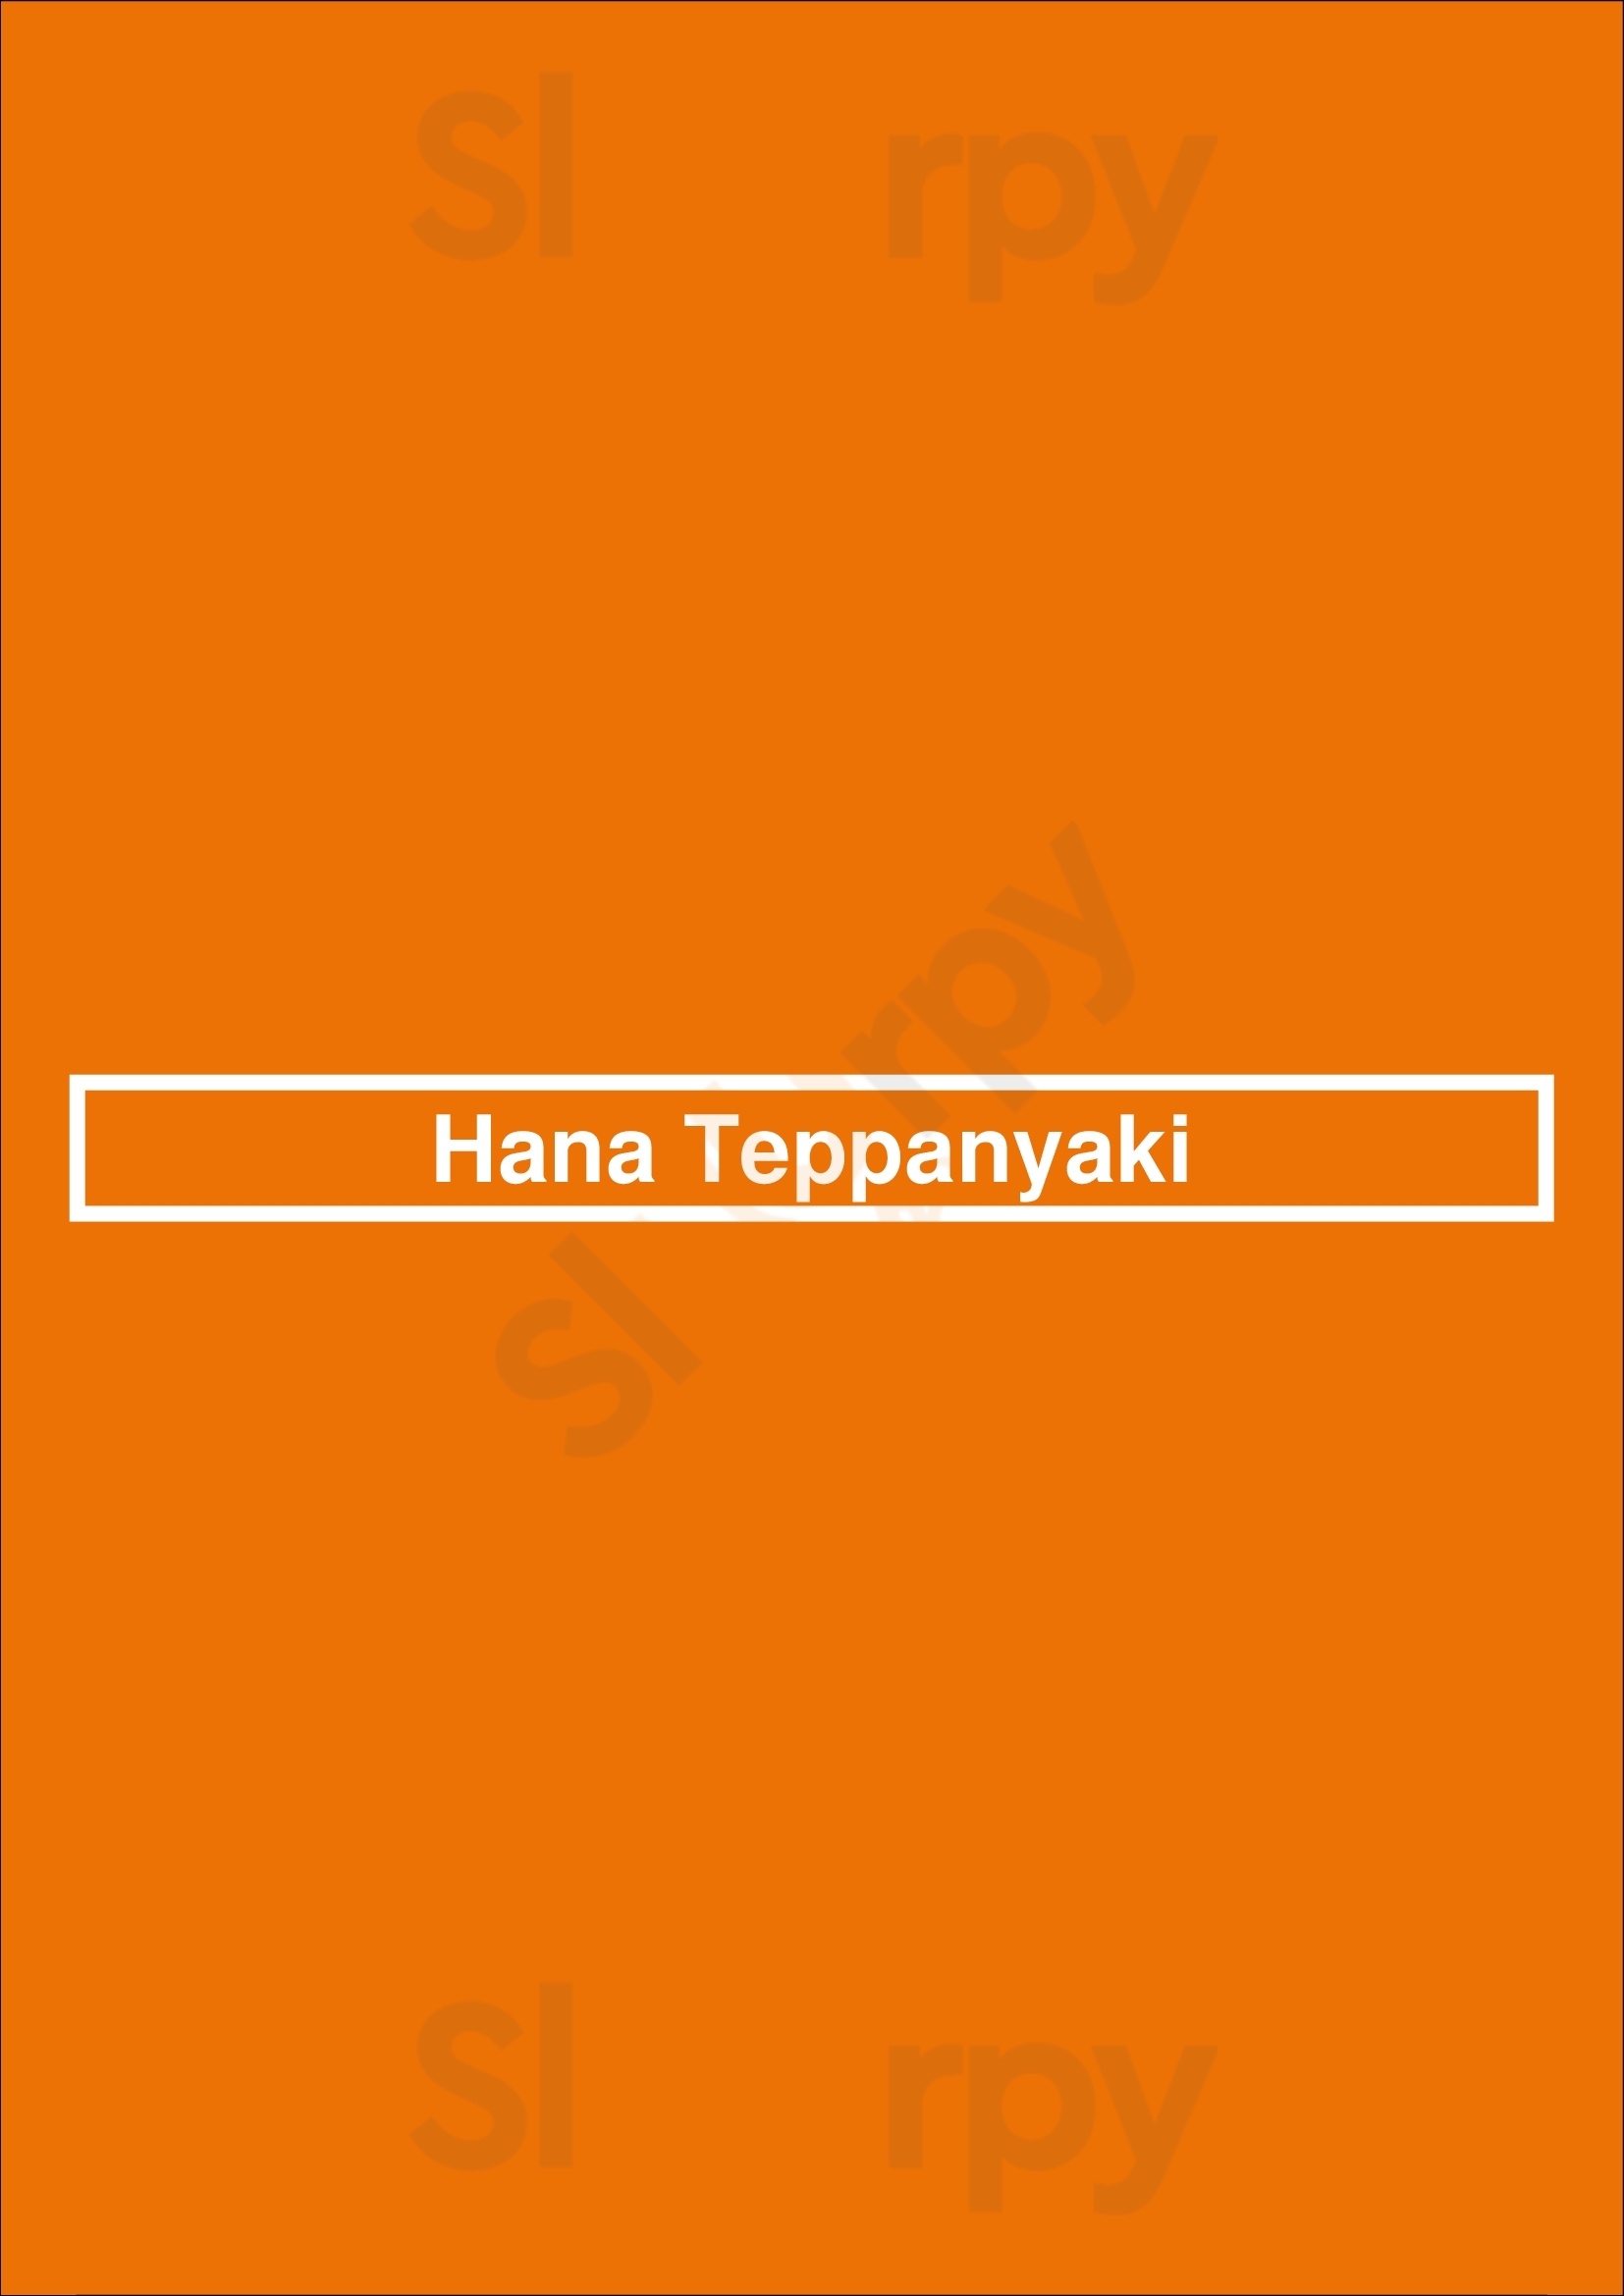 Hana Teppanyaki Compton Menu - 1